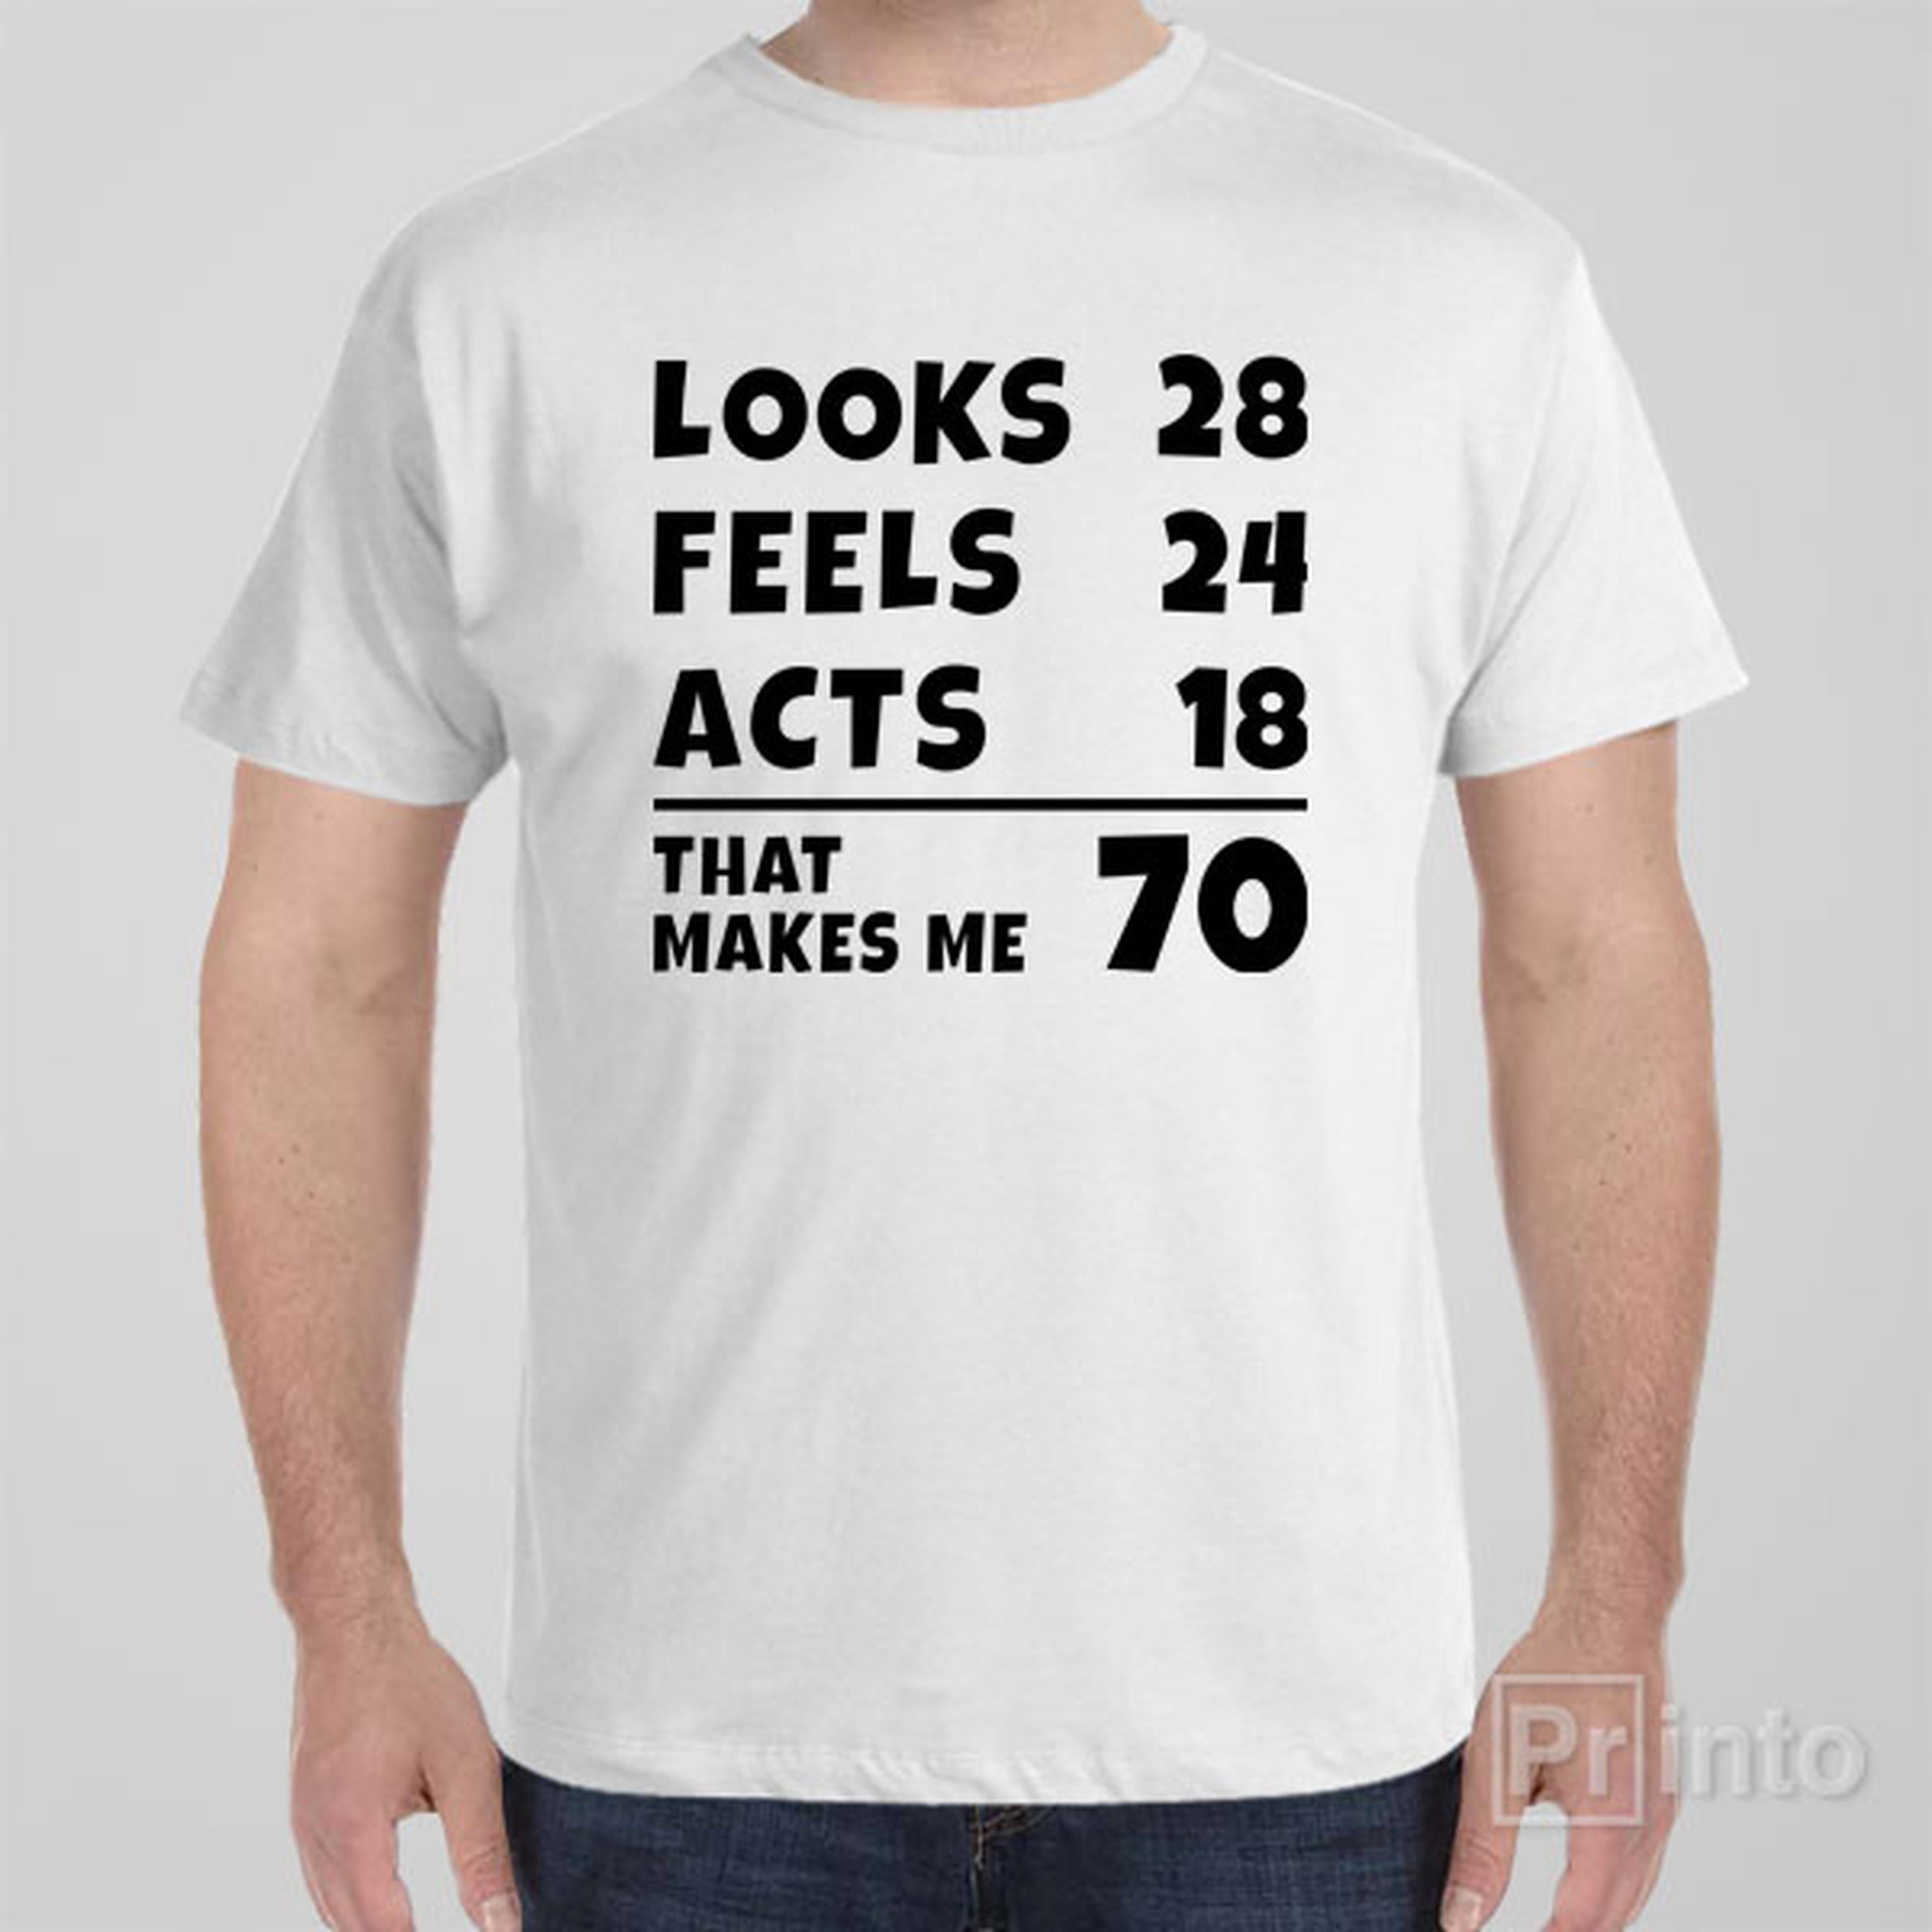 that-makes-me-70-t-shirt